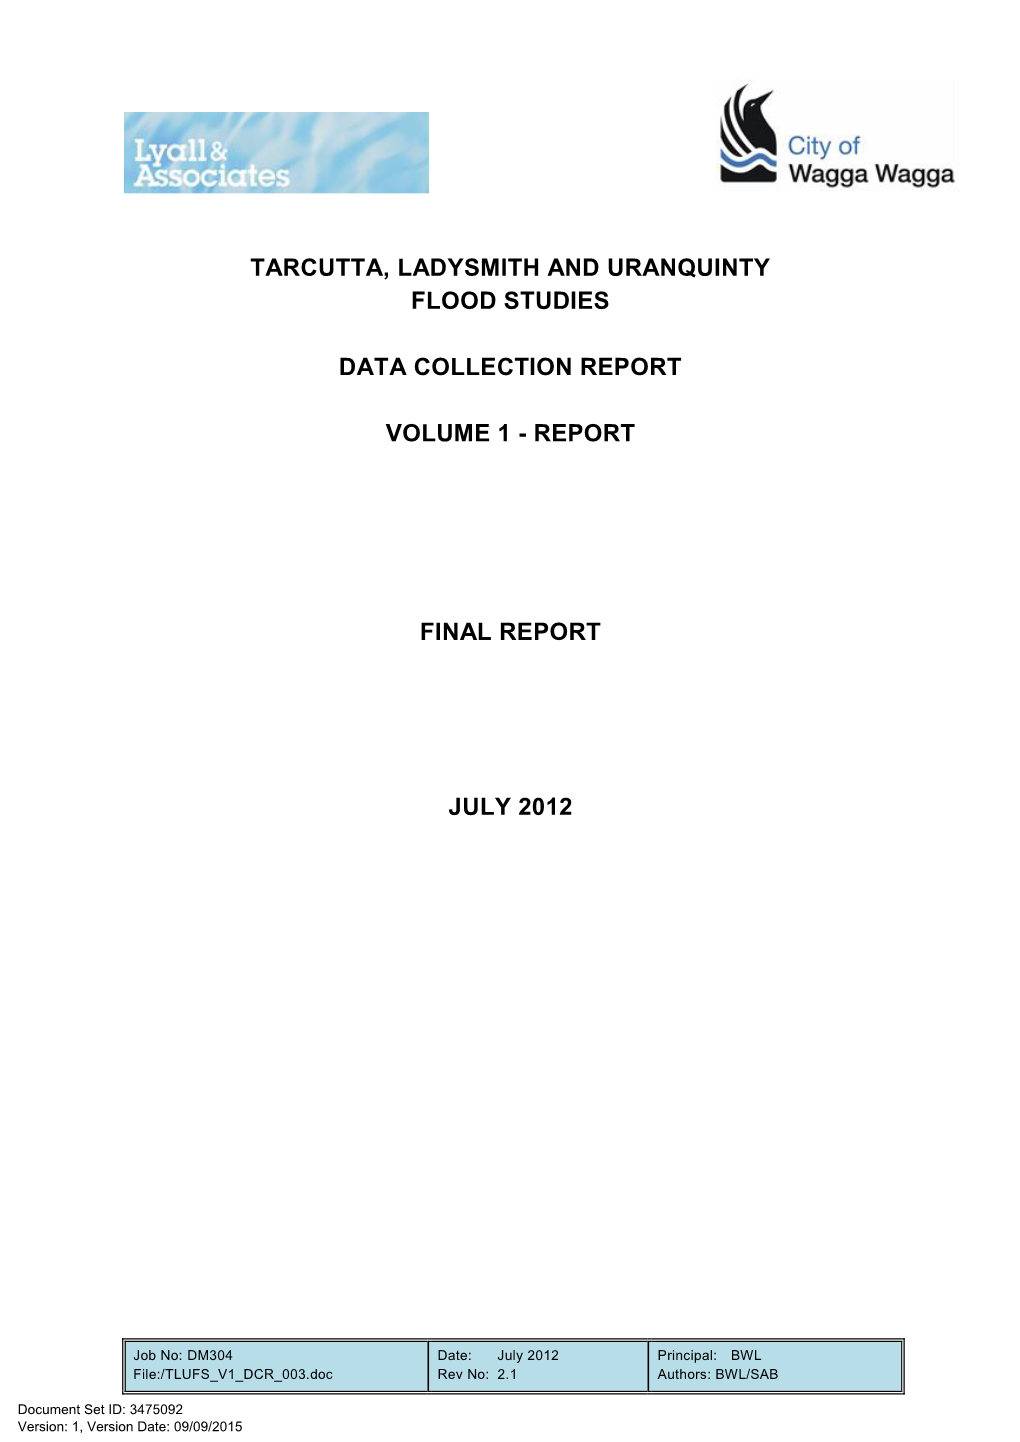 Tarcutta, Ladysmith and Uranquinty Flood Studies Data Collection Report